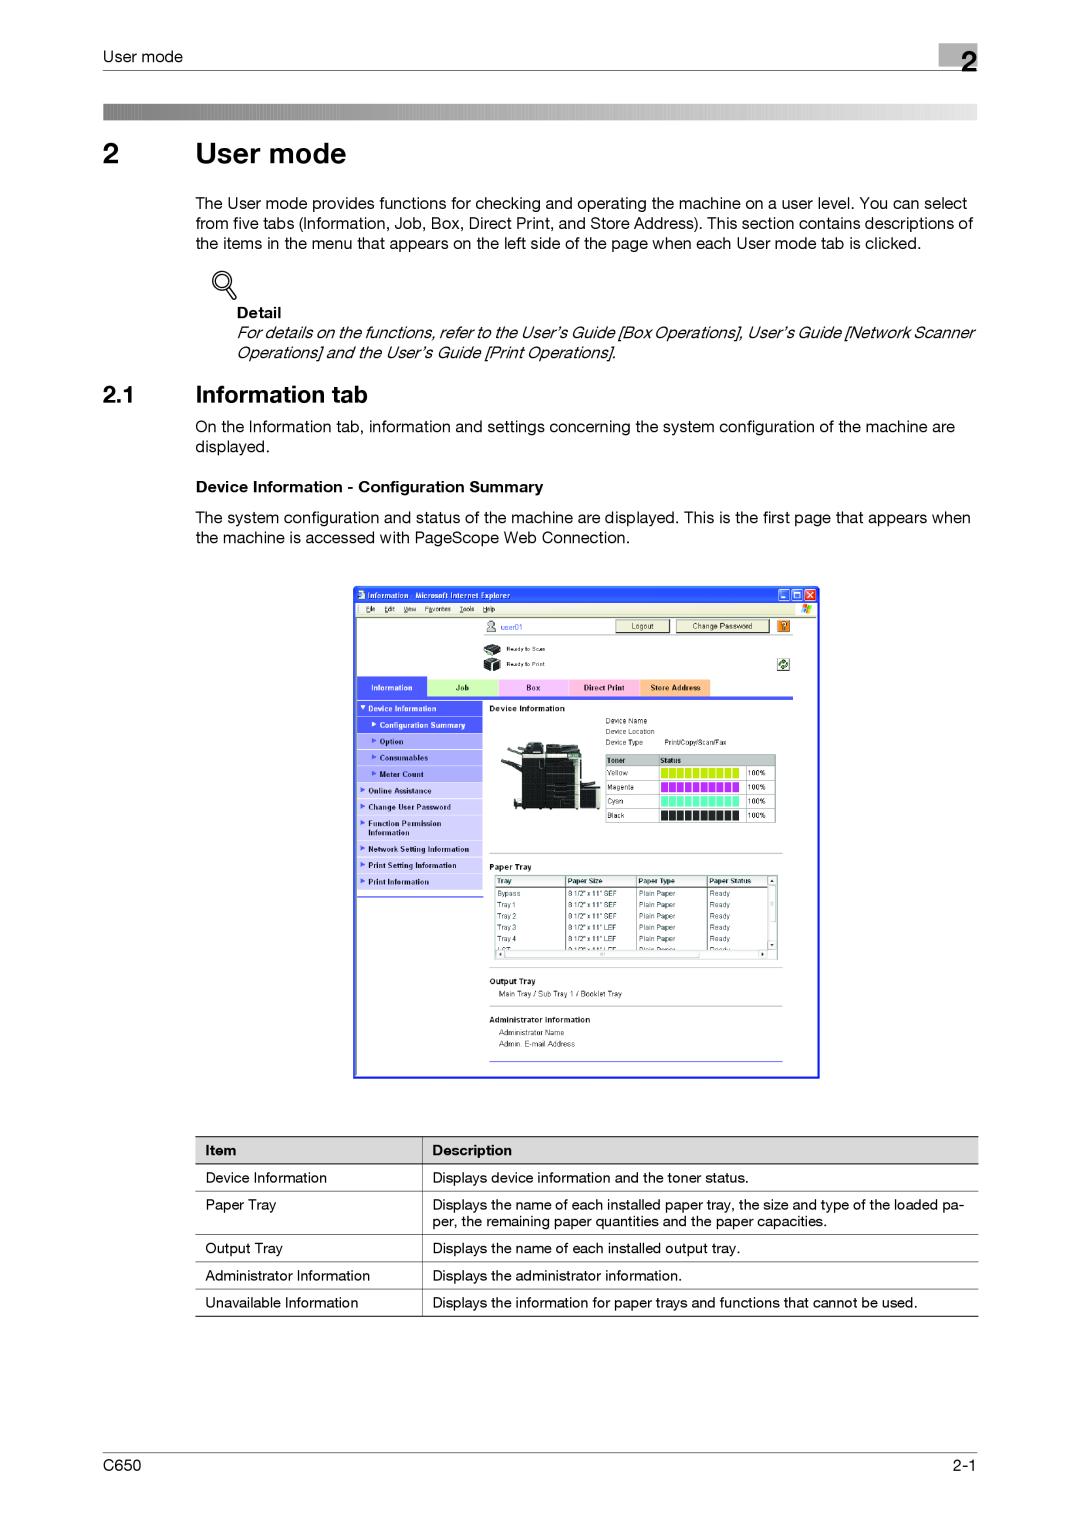 Konica Minolta C650 manual User mode, 2.1Information tab 